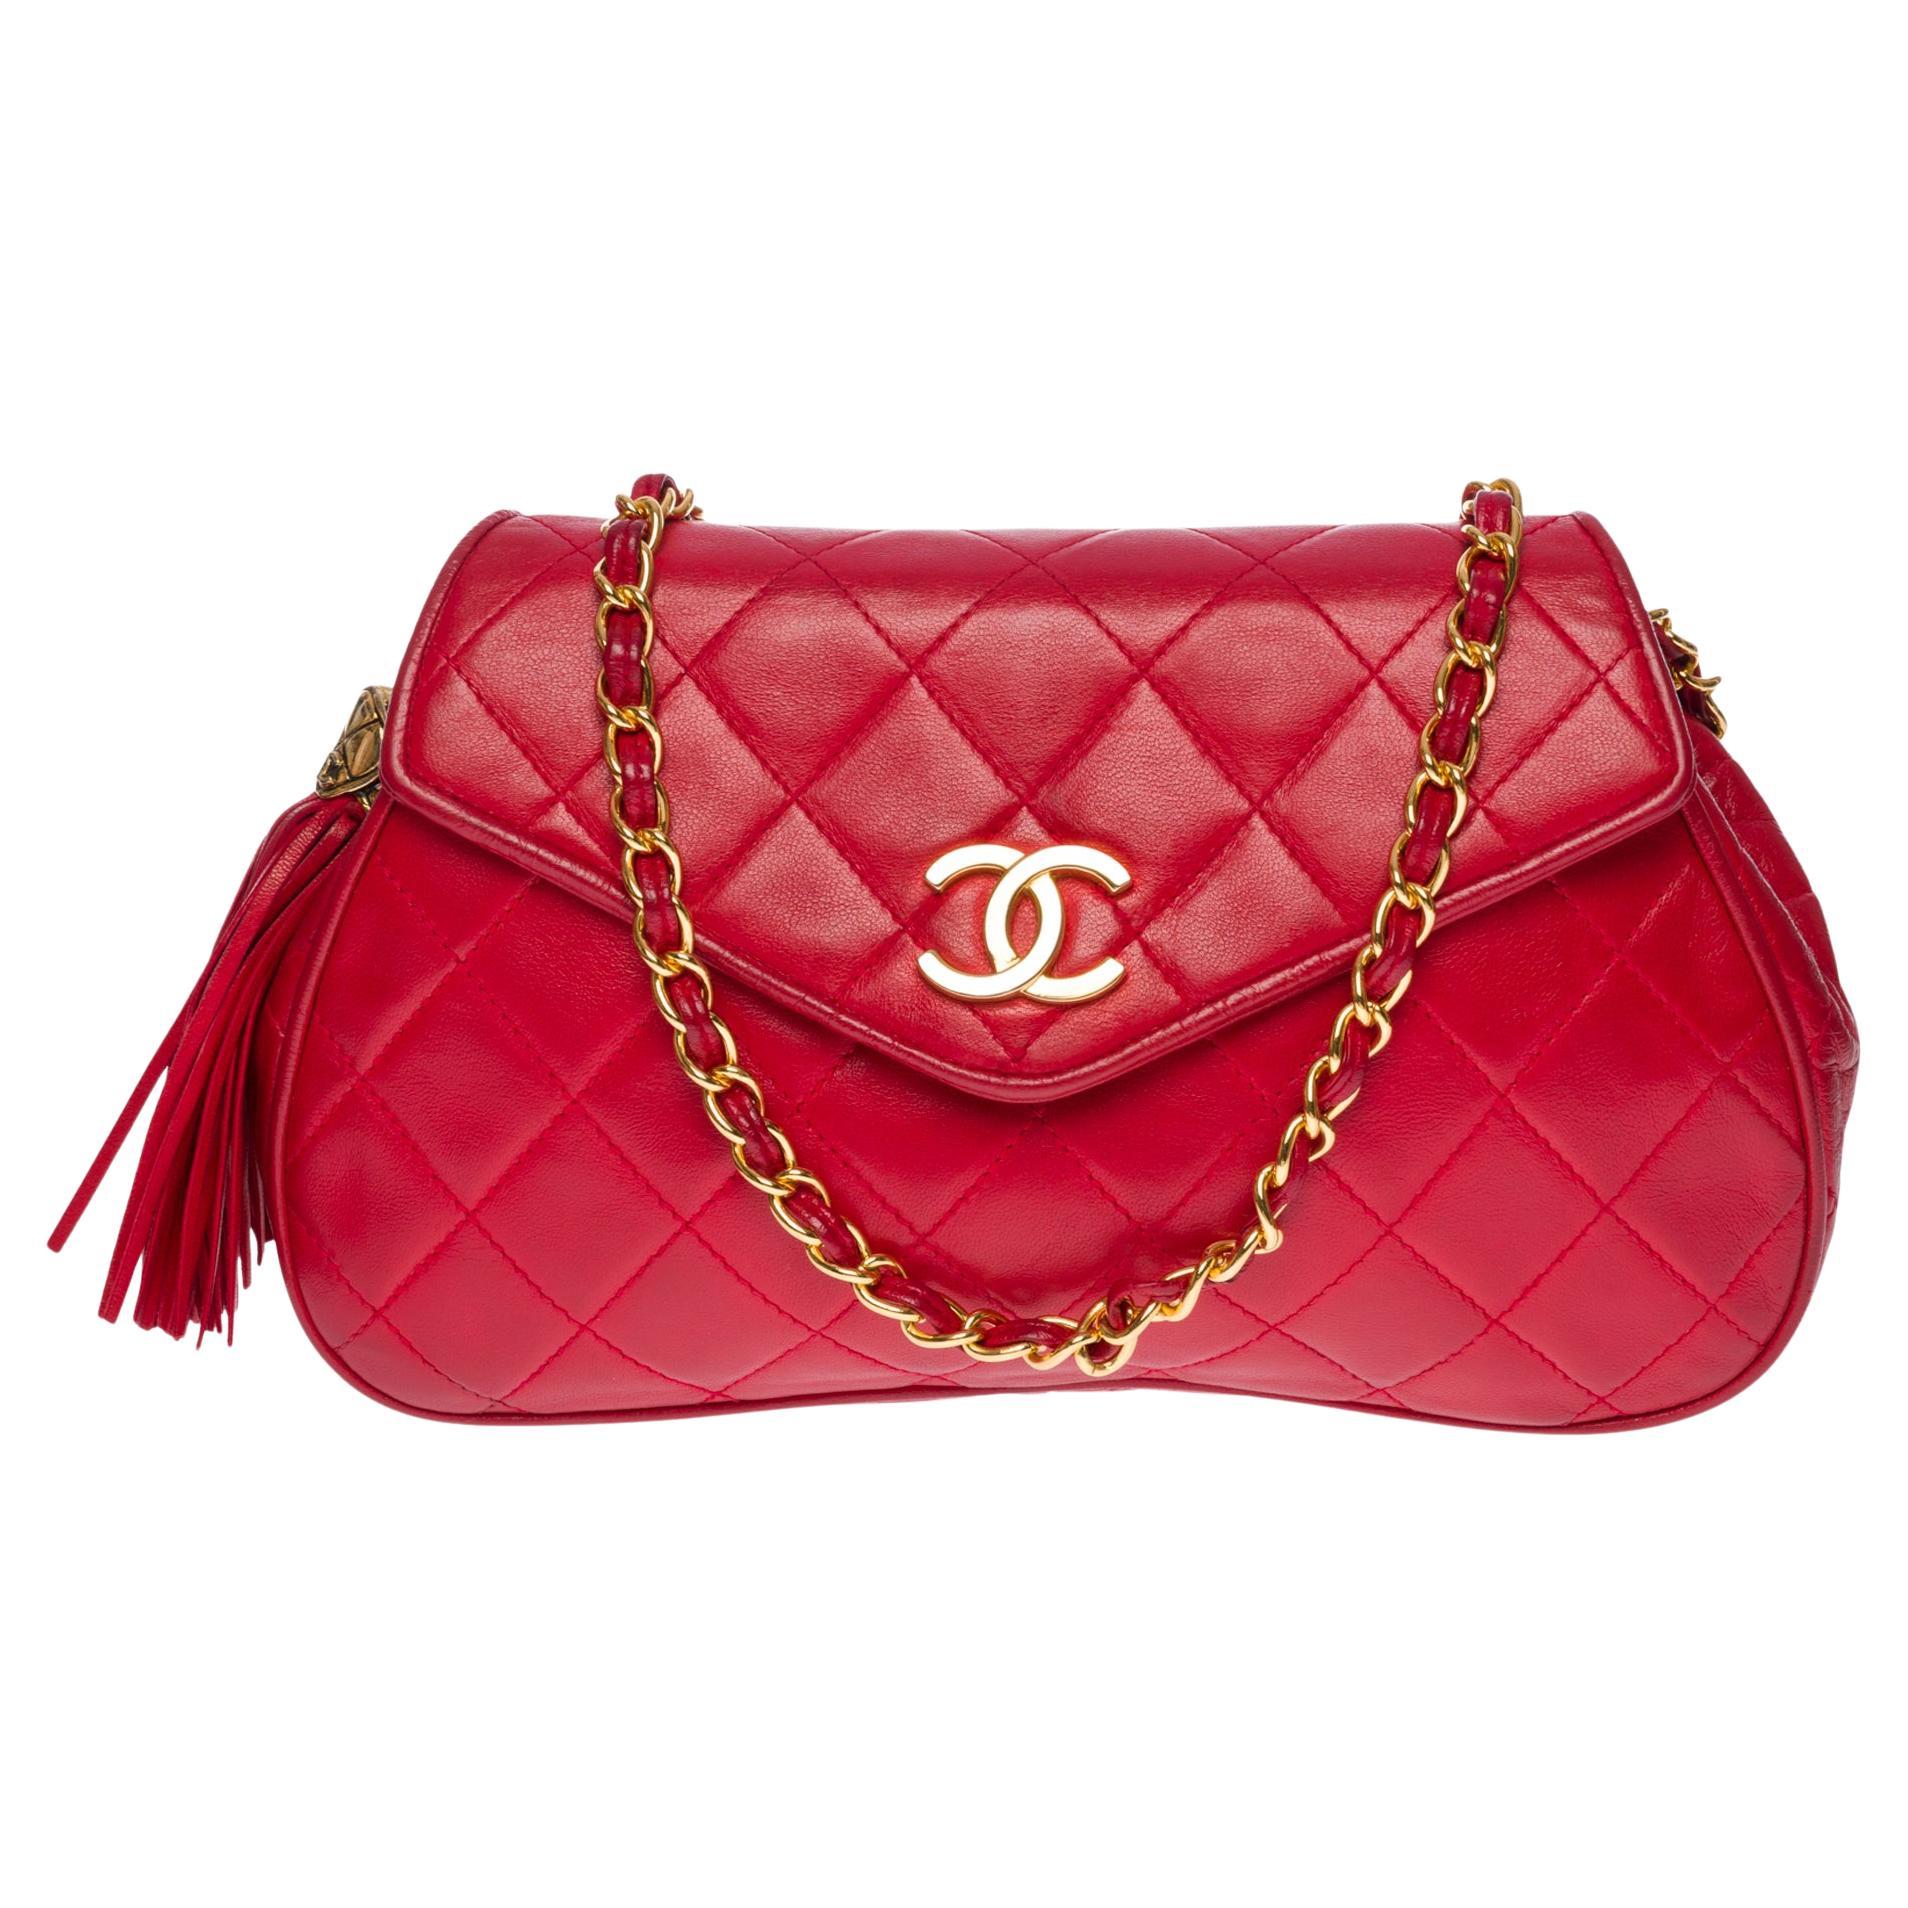 chanel red leather handbag